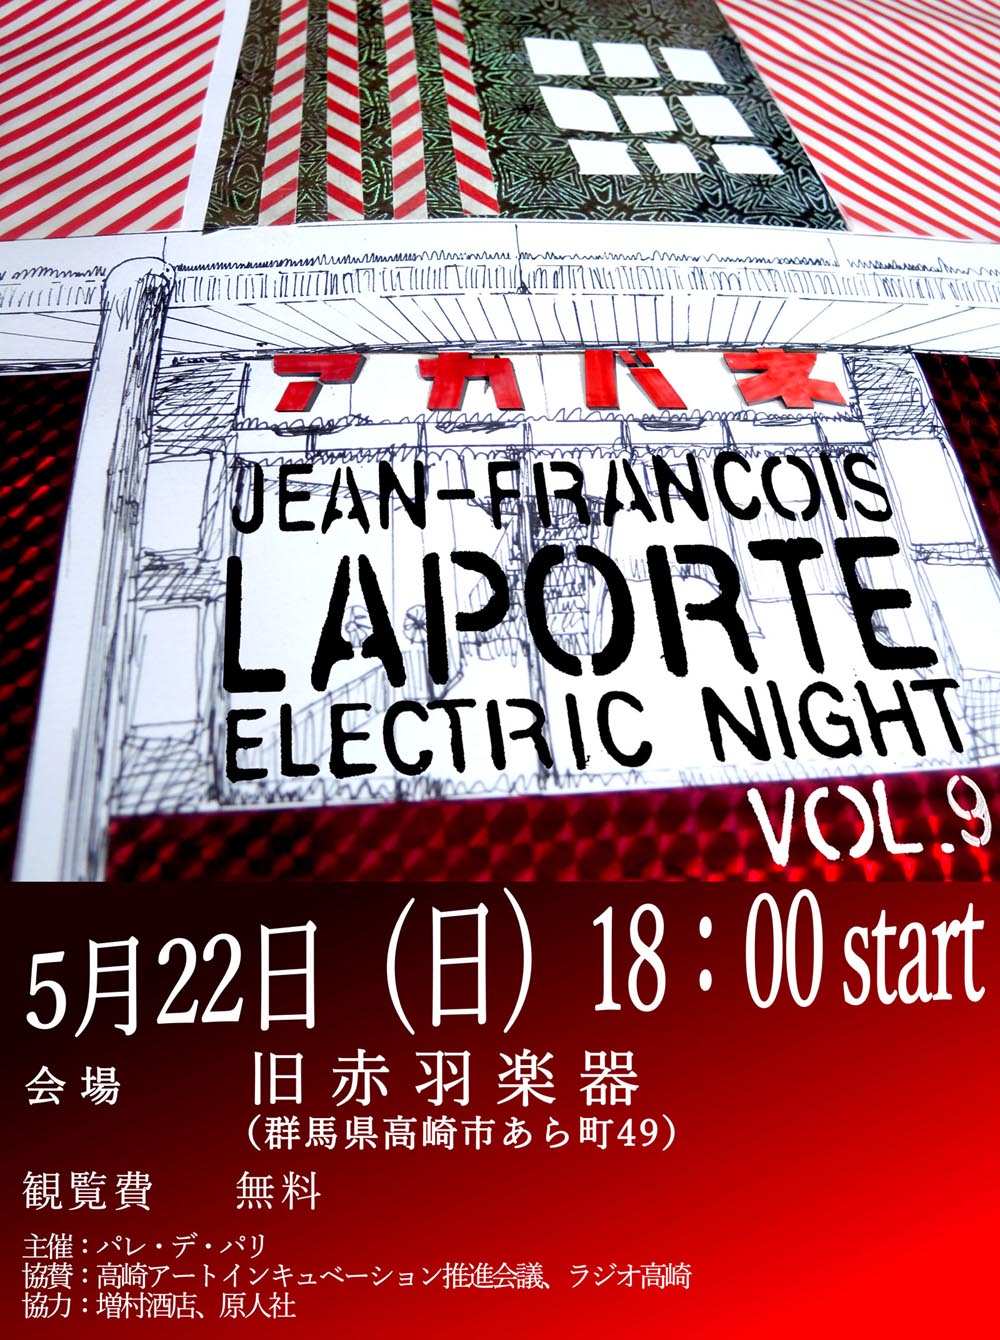 electric-night-vol9